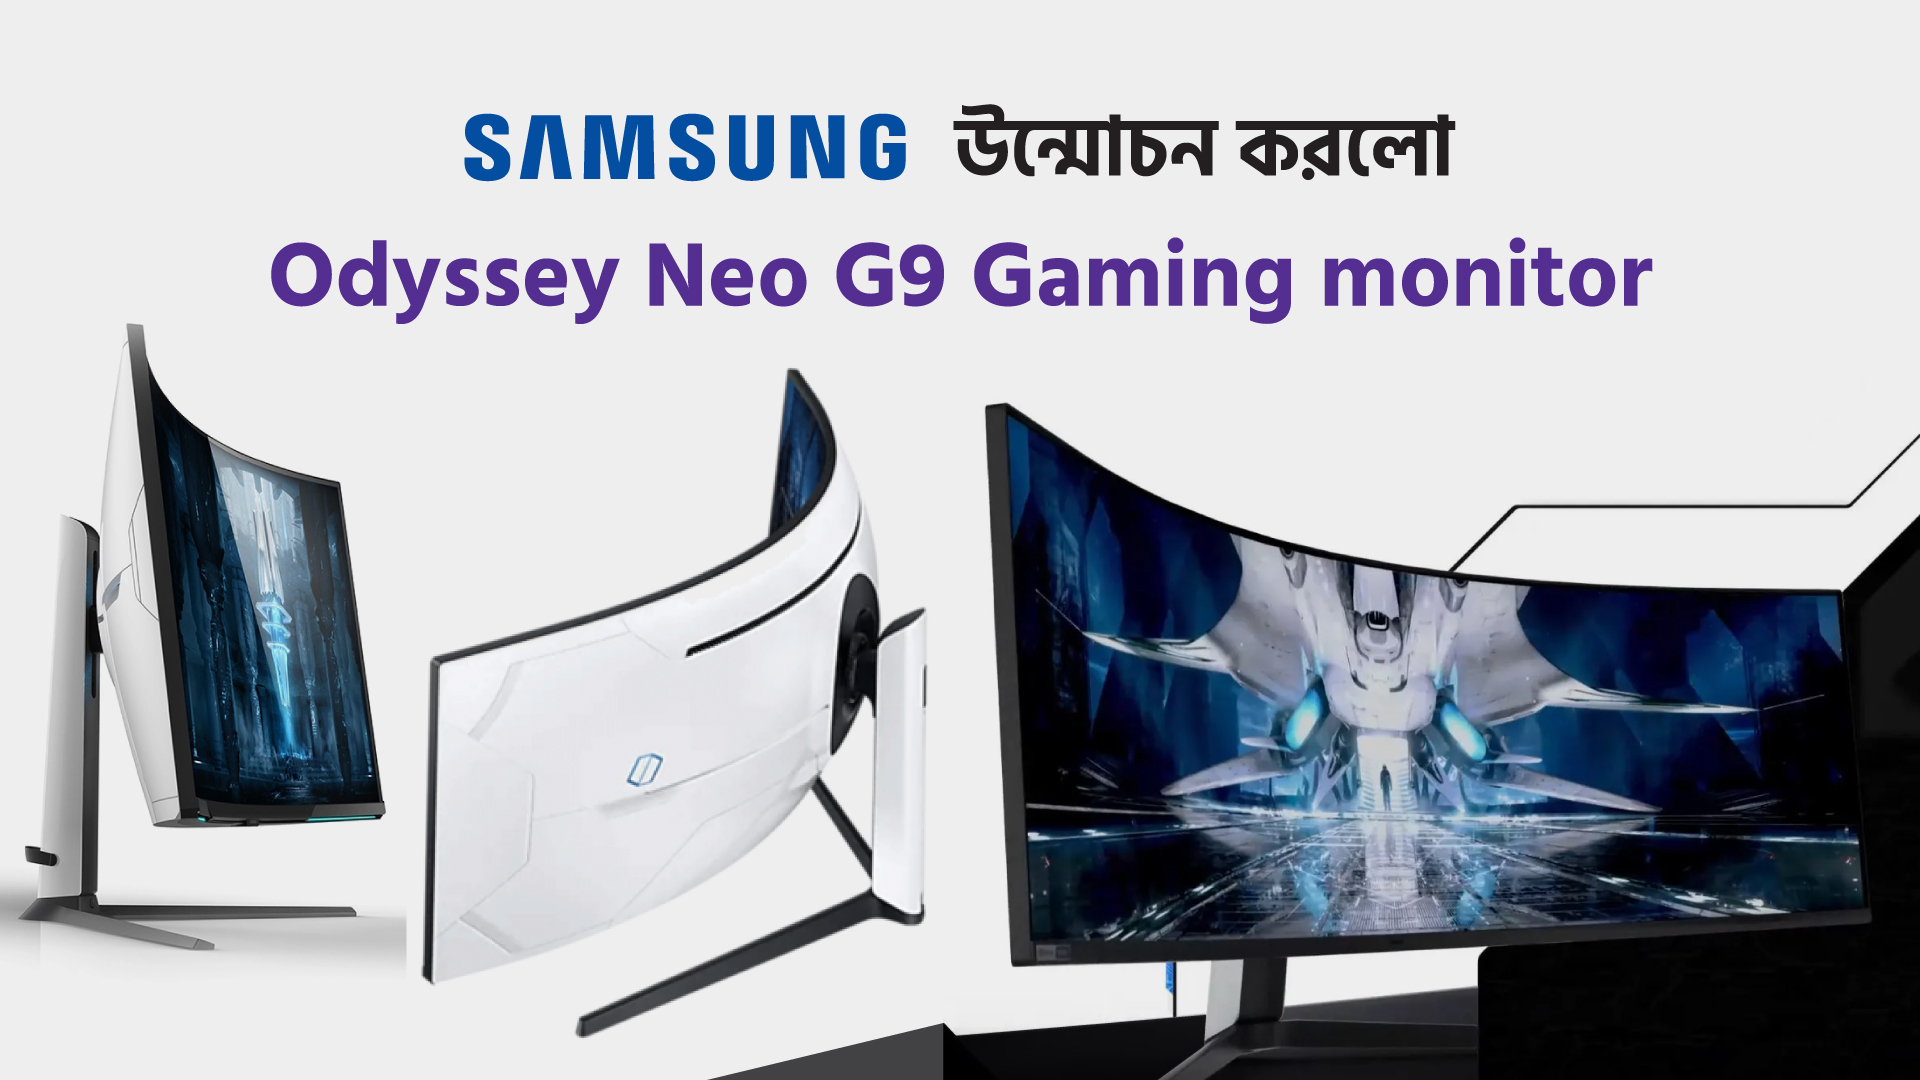 Samsung উন্মোচন করলো Odyssey Neo G9 Gaming monitor